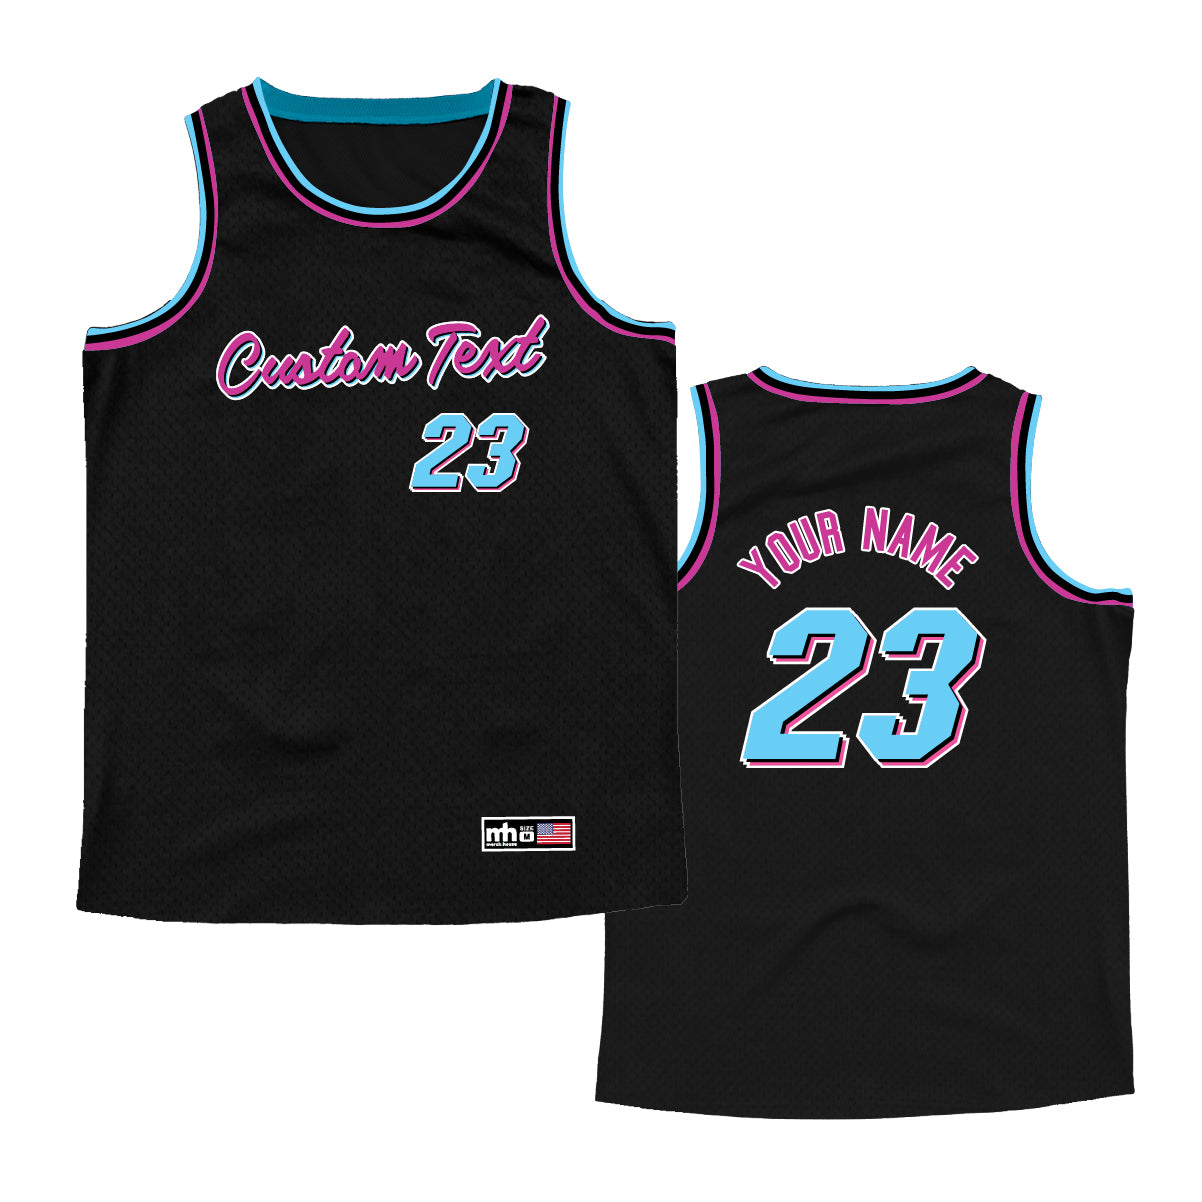 Deuce Basketball Jersey | Miami Vice 3XL / Black